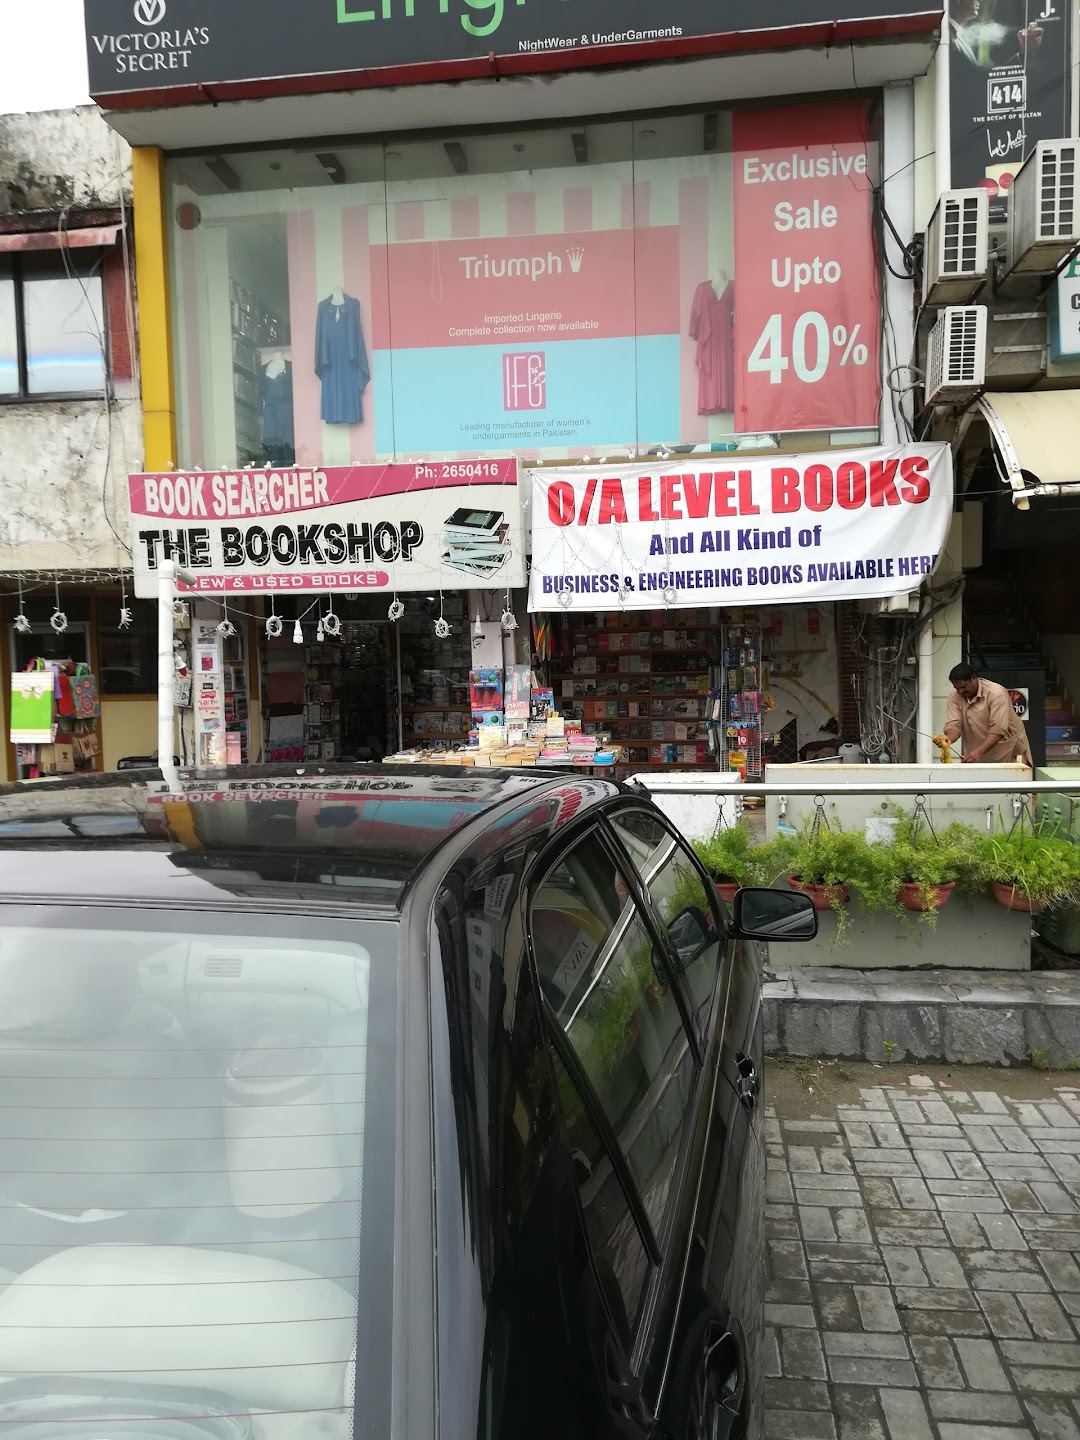 Book Searcher The Bookshop